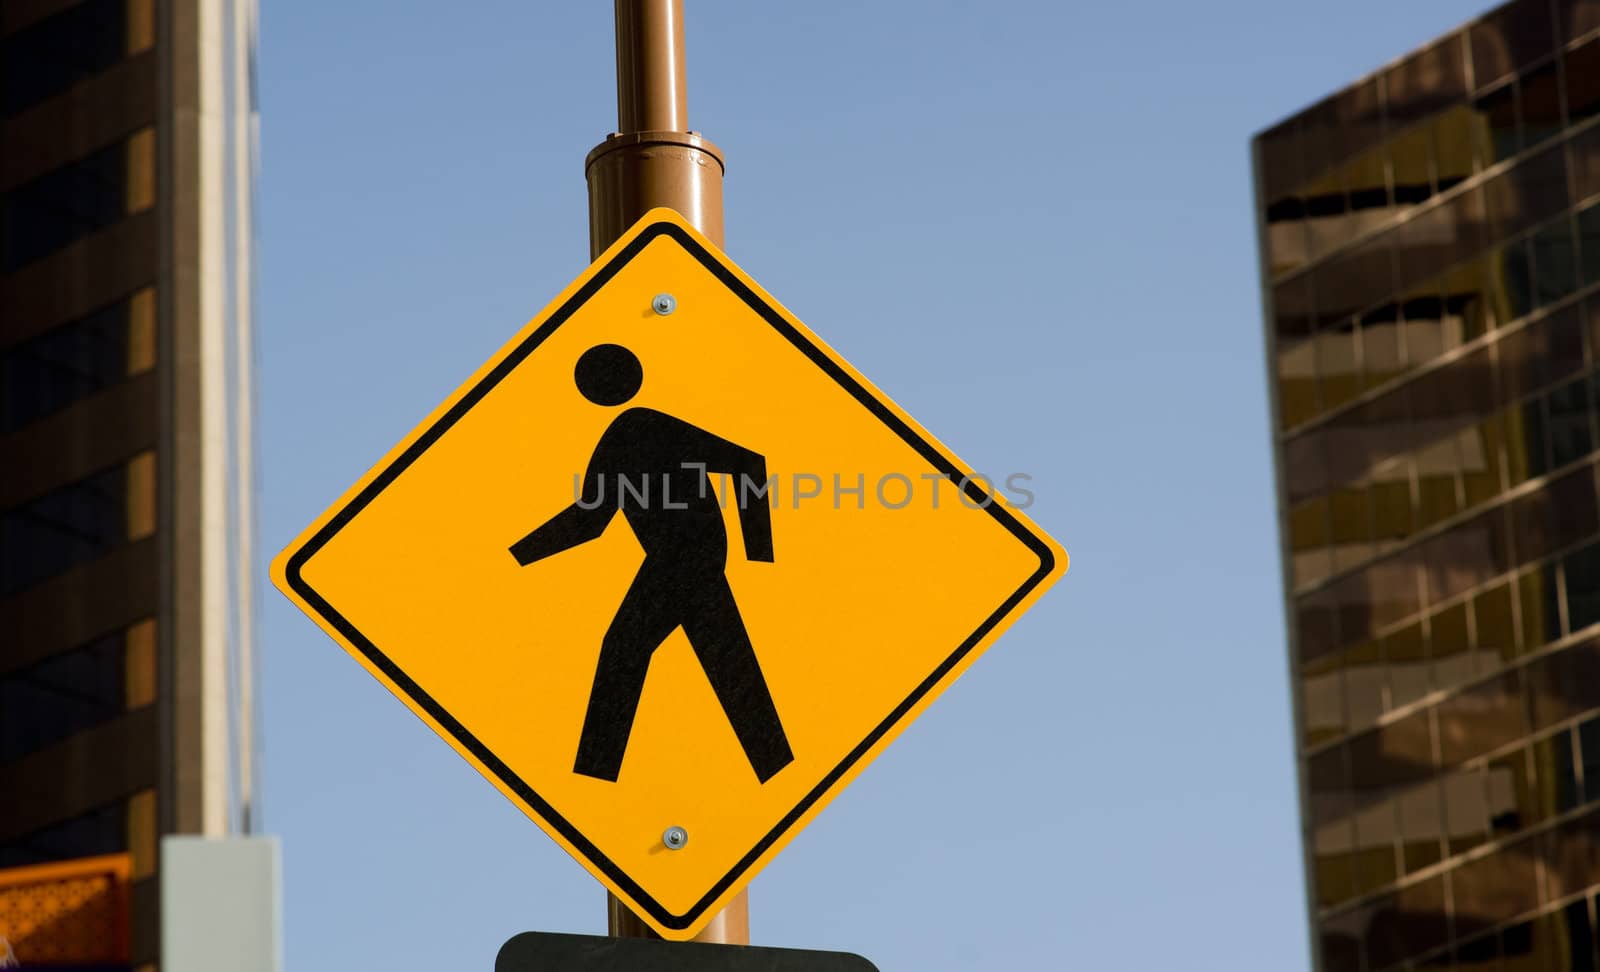 Pedestrian Crossing Sign on the street corner